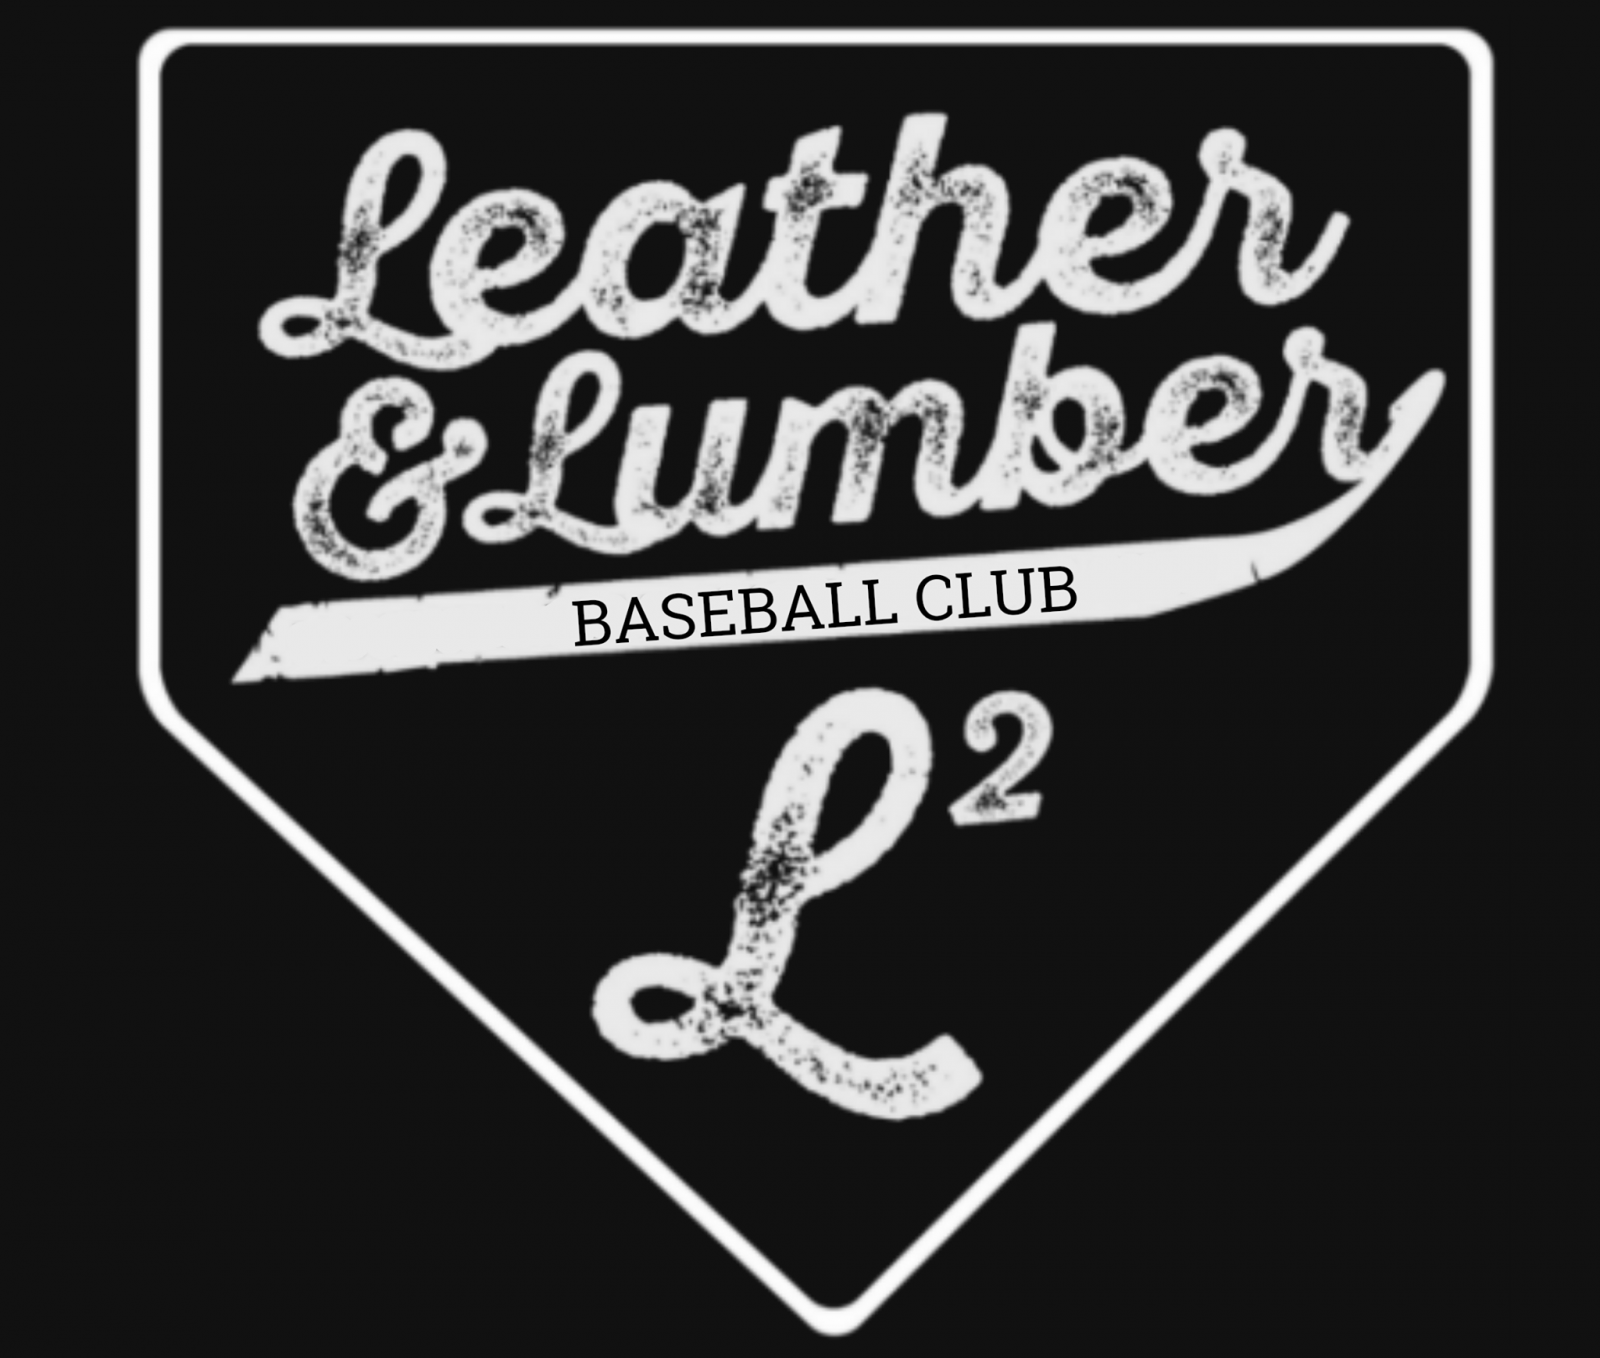 Leather And Lumber Baseball Baseball Youth Travel Team